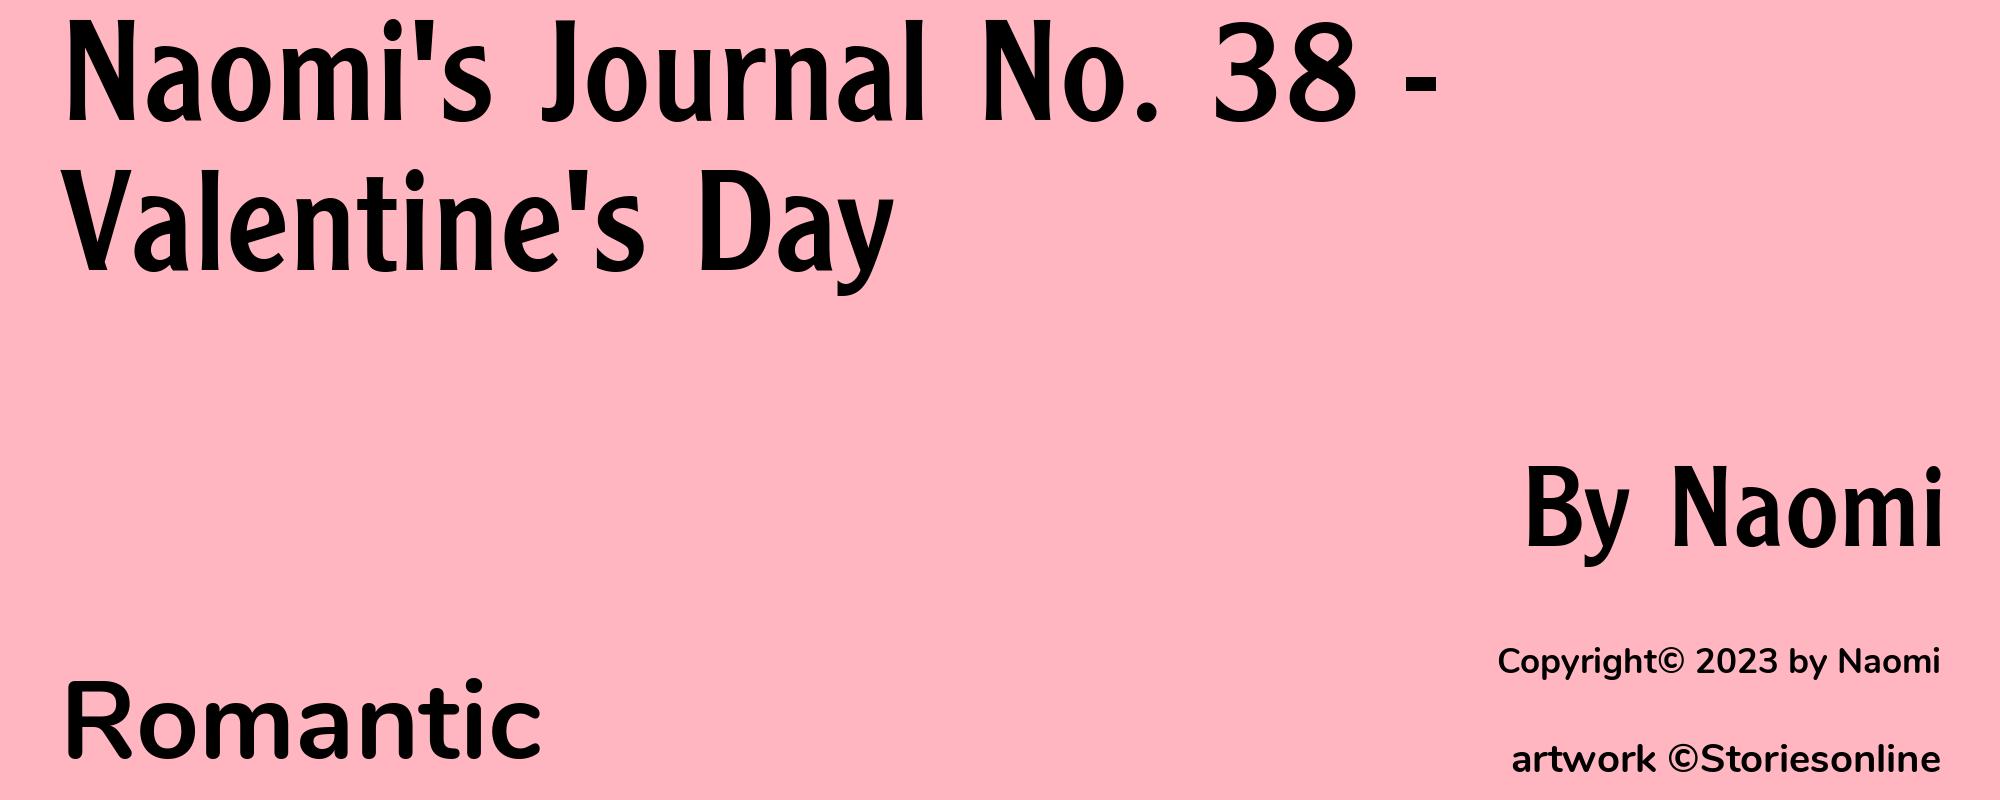 Naomi's Journal No. 38 - Valentine's Day - Cover